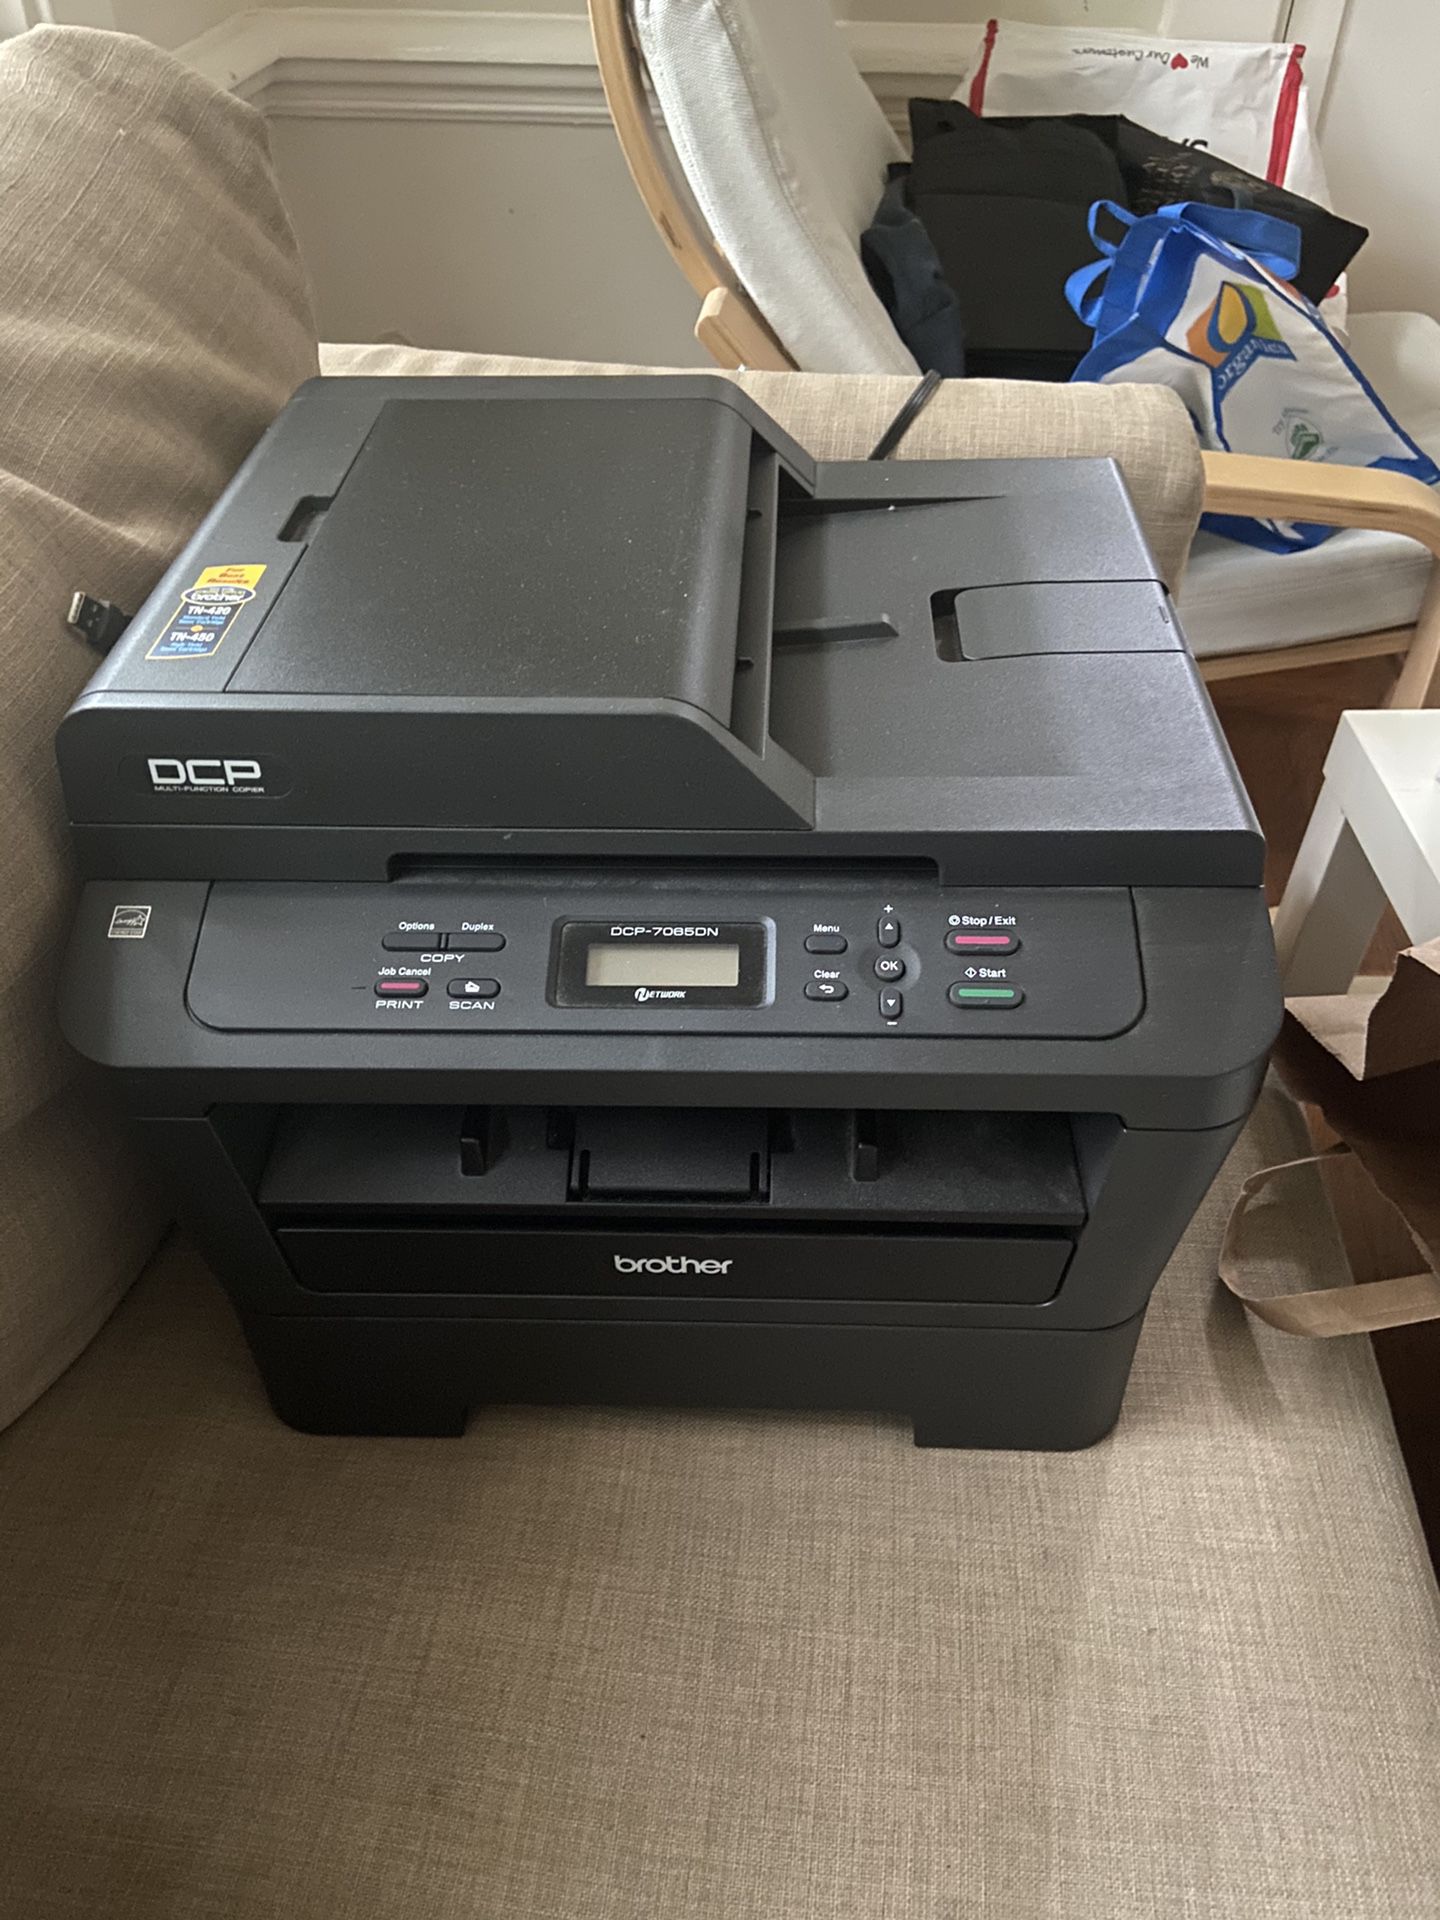 Brother printer, copier, scanner